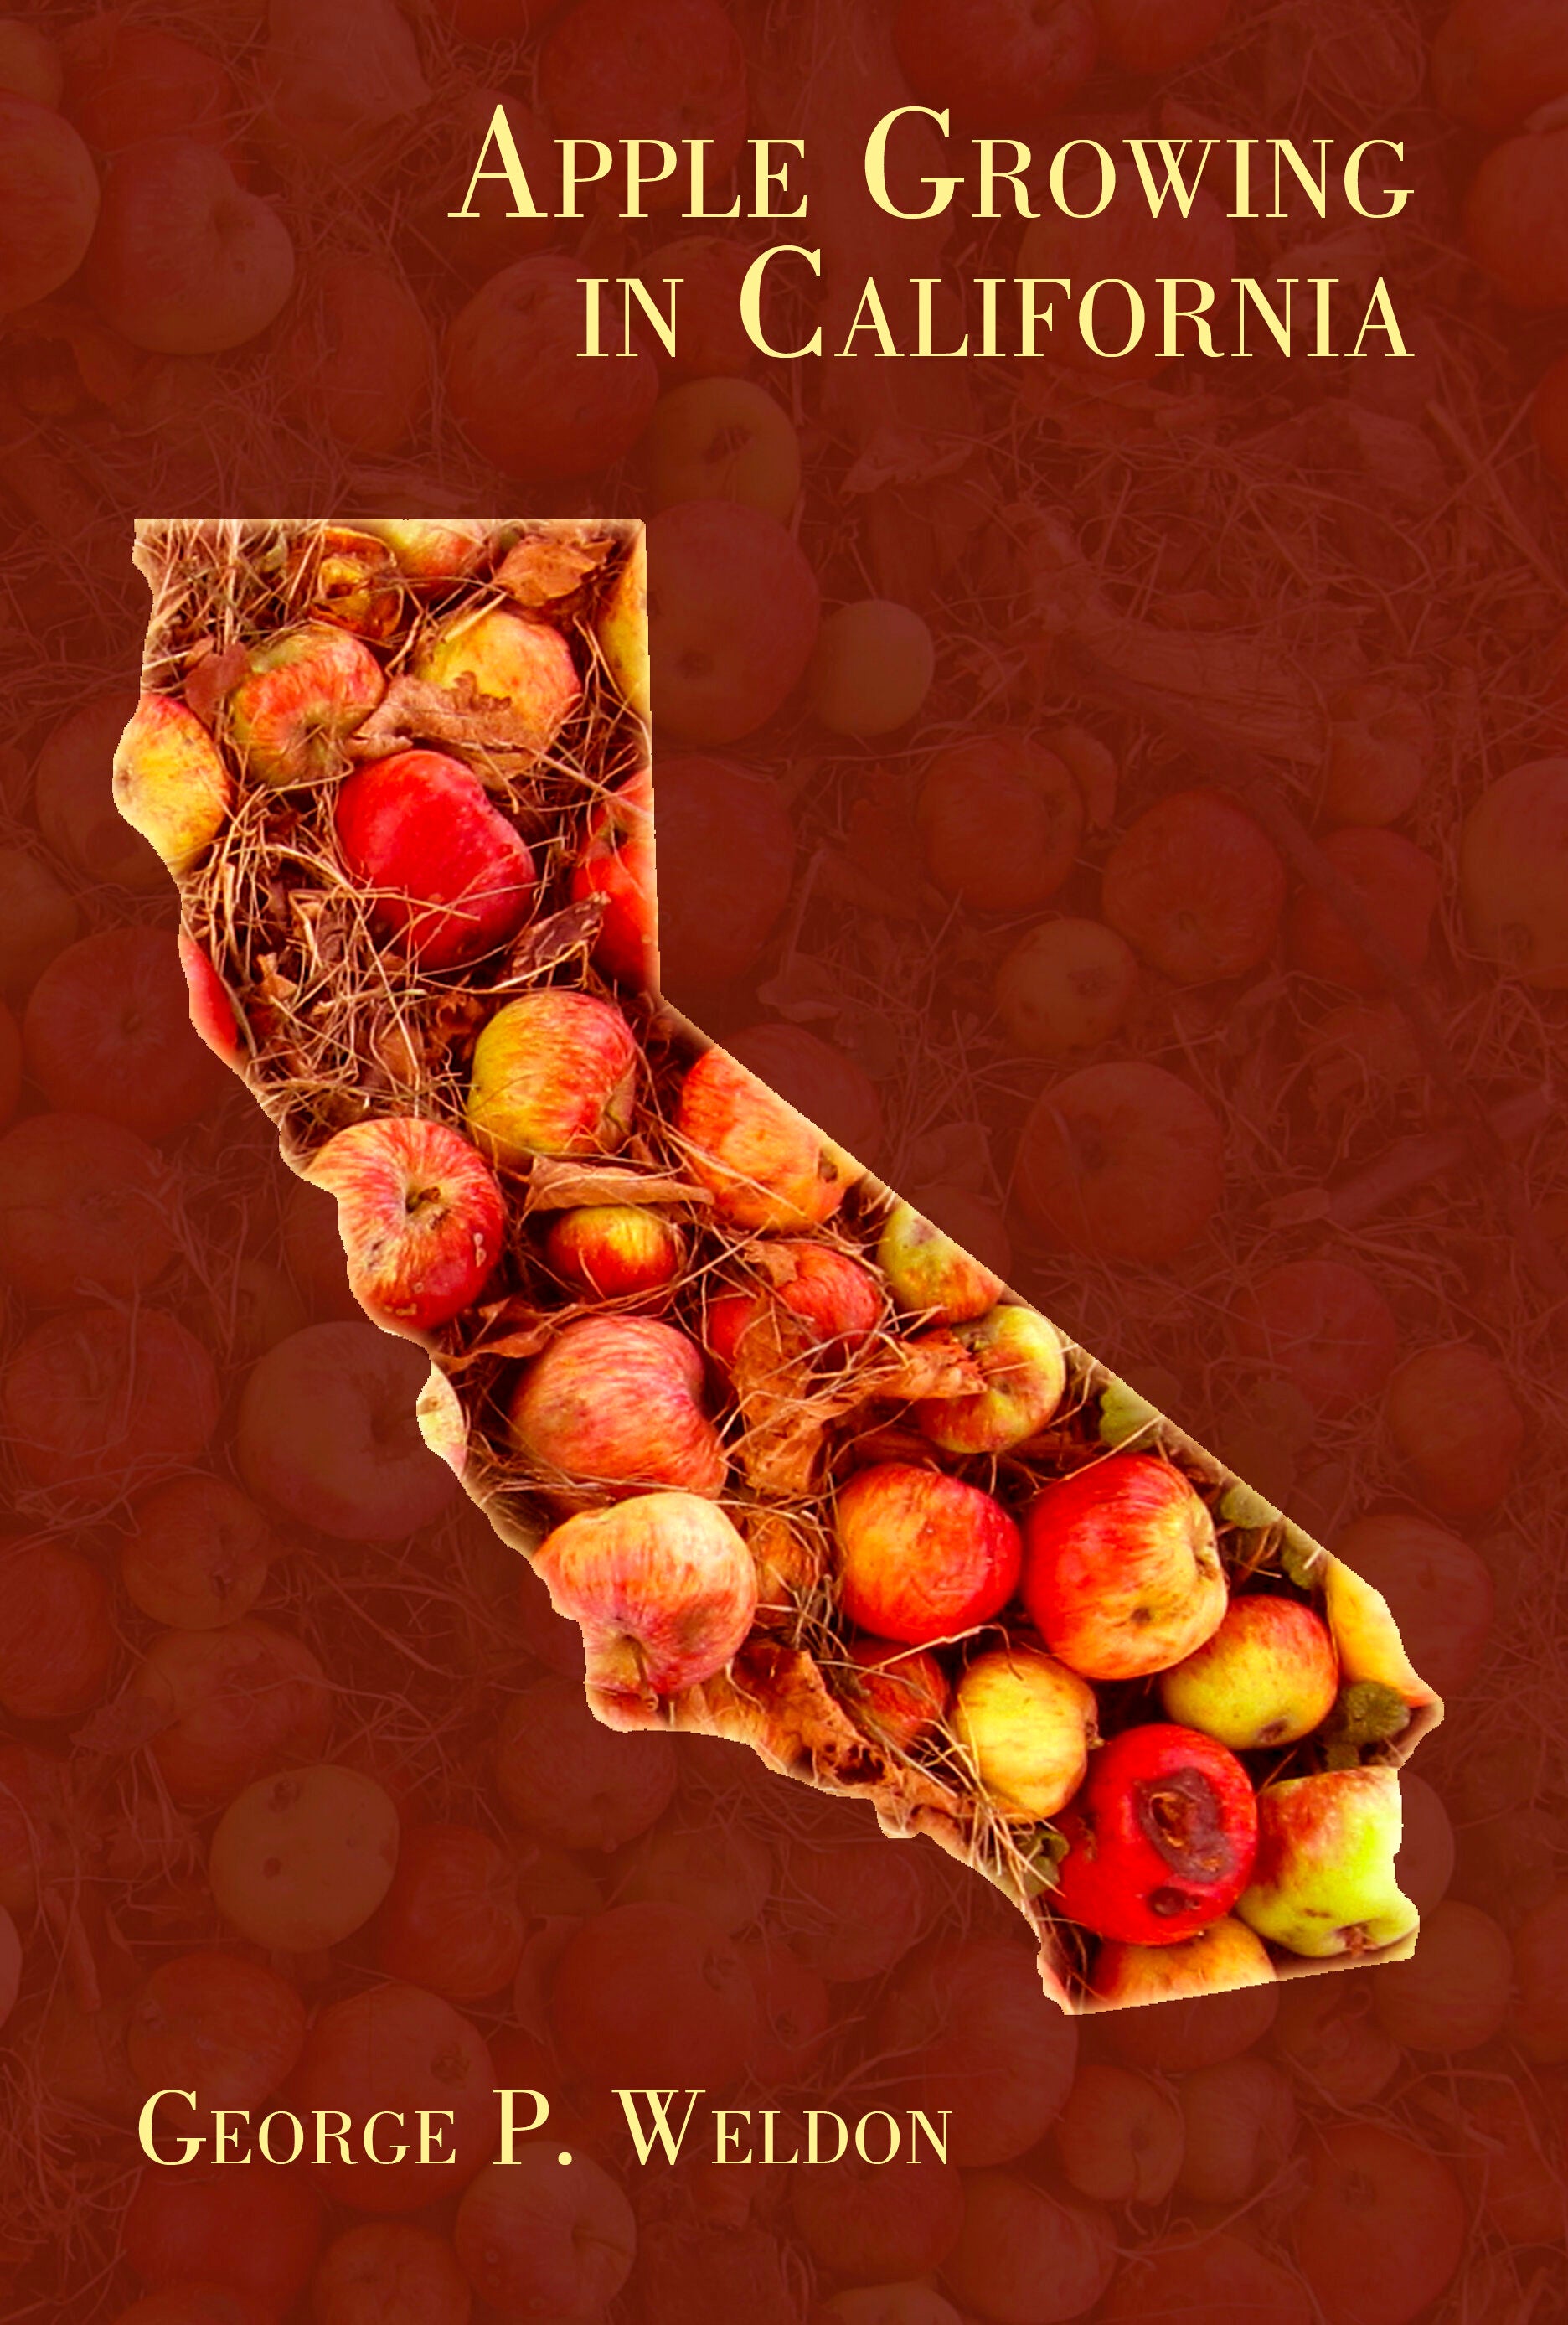 Growing Apples in California